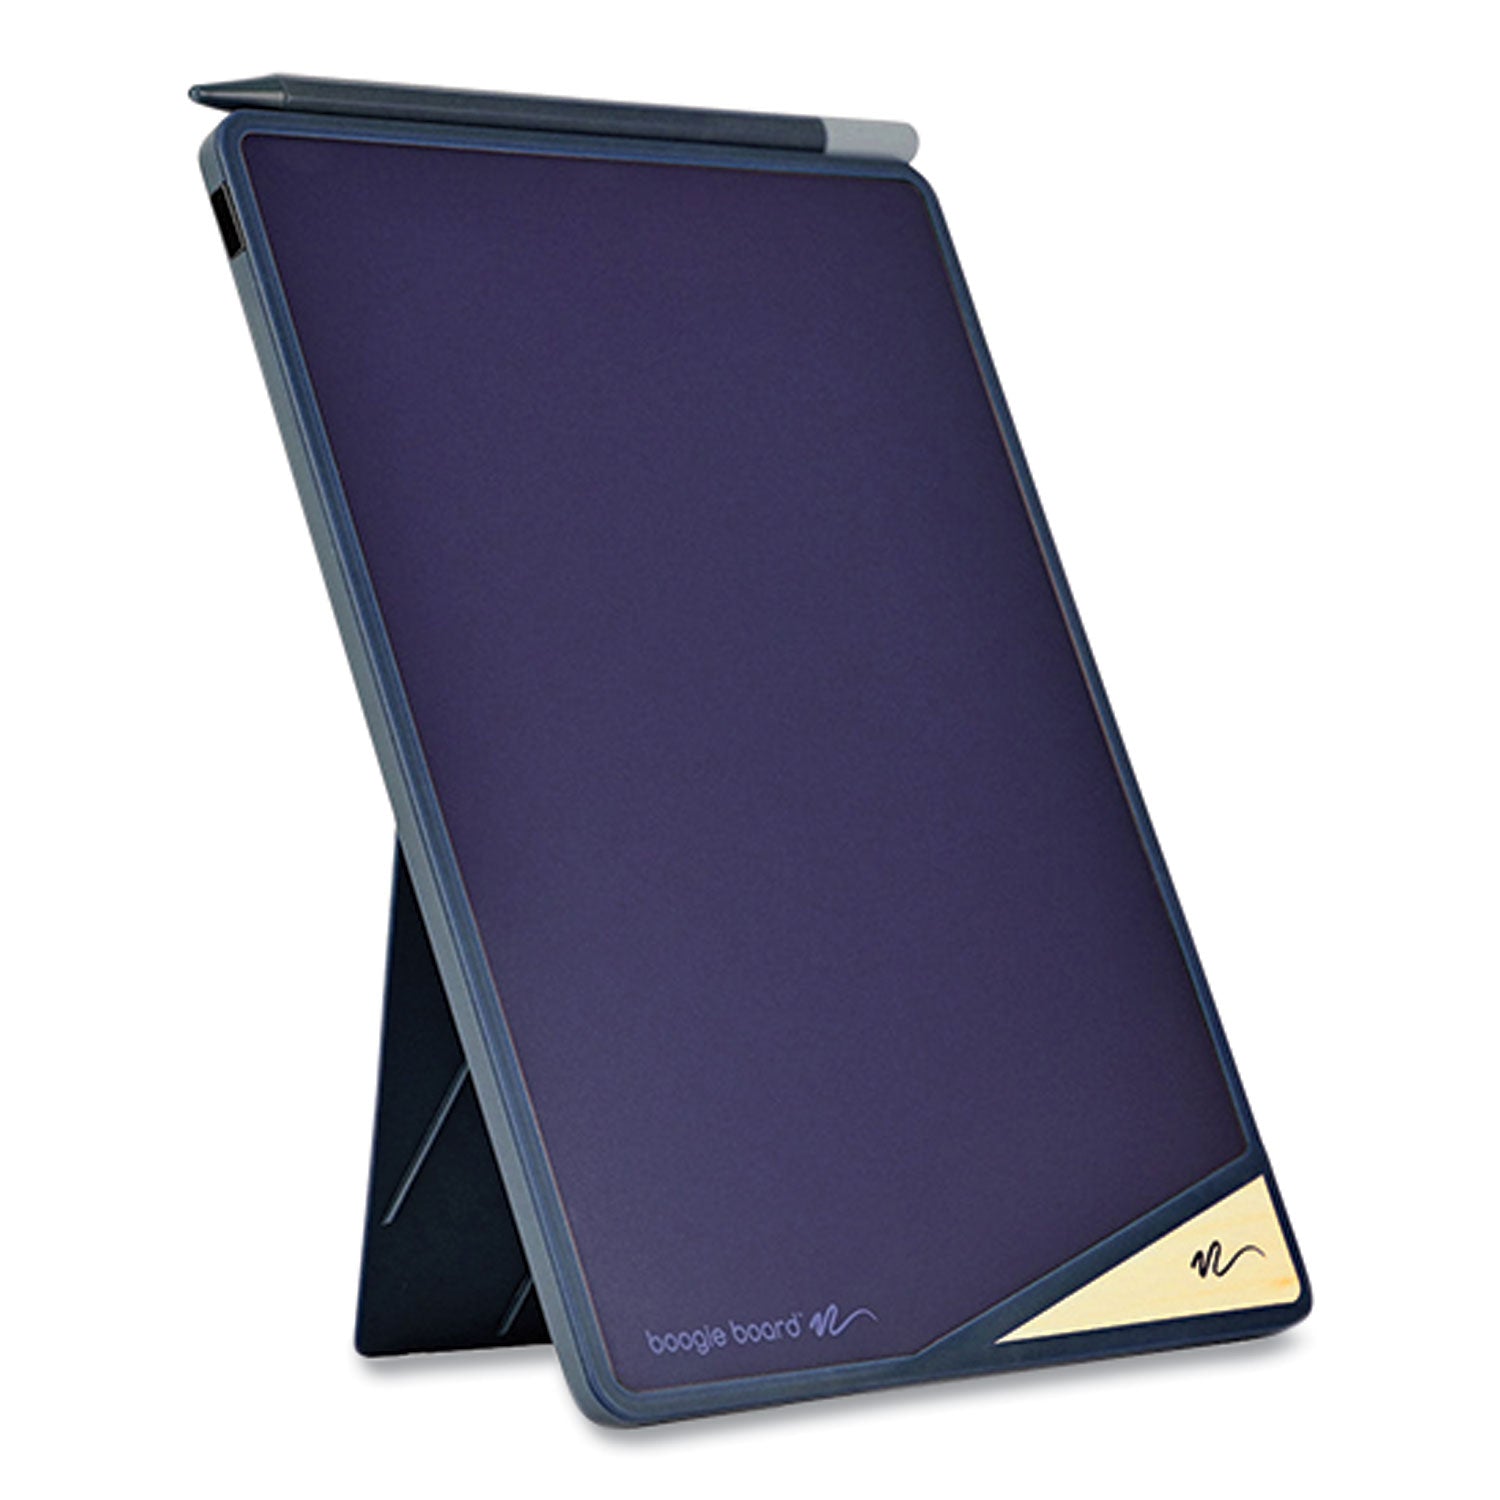 versaboard-reusable-writing-tablet-85-lcd-touchscreen-55-x-725-slate-blue-black_imv0260001 - 1